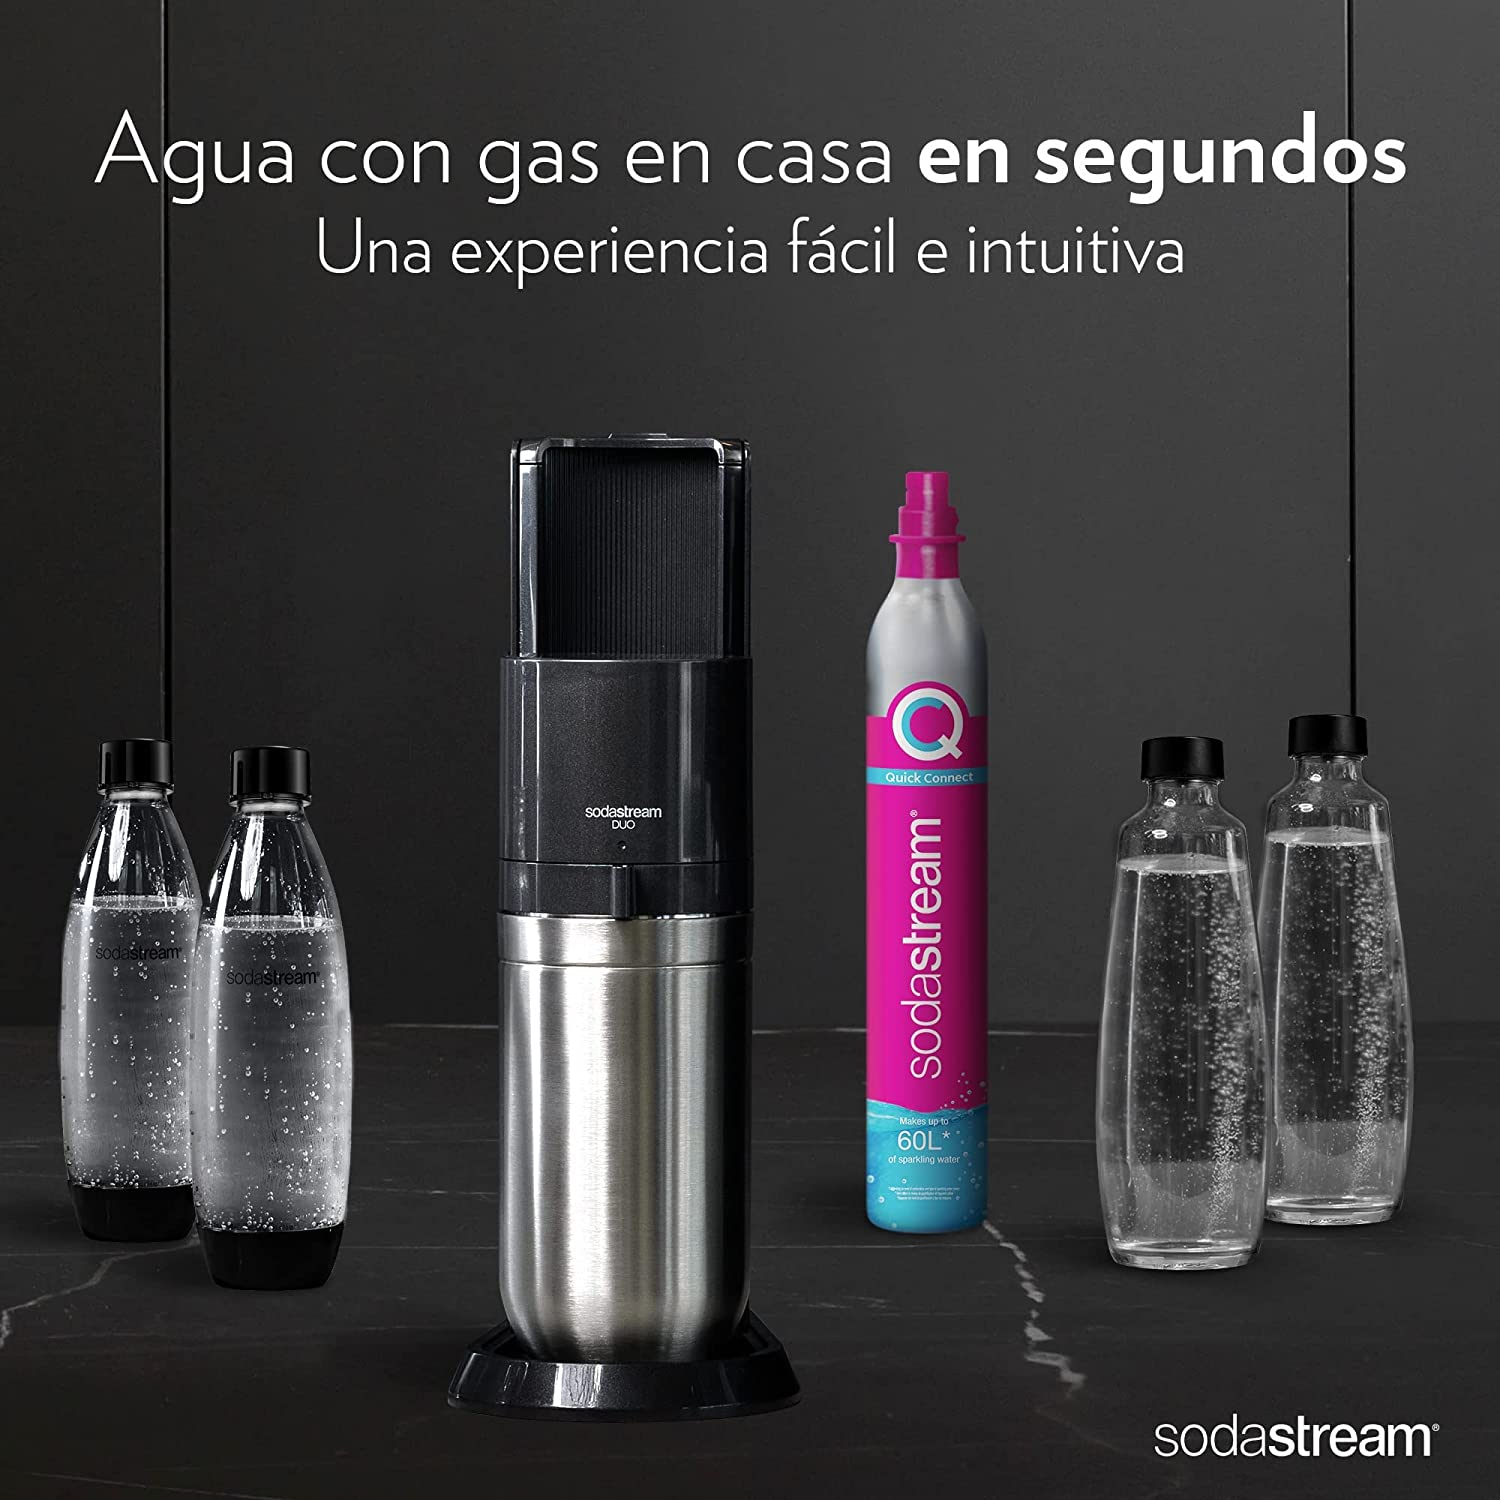 Sodastream llega a España con sus máquinas gasificadoras de agua